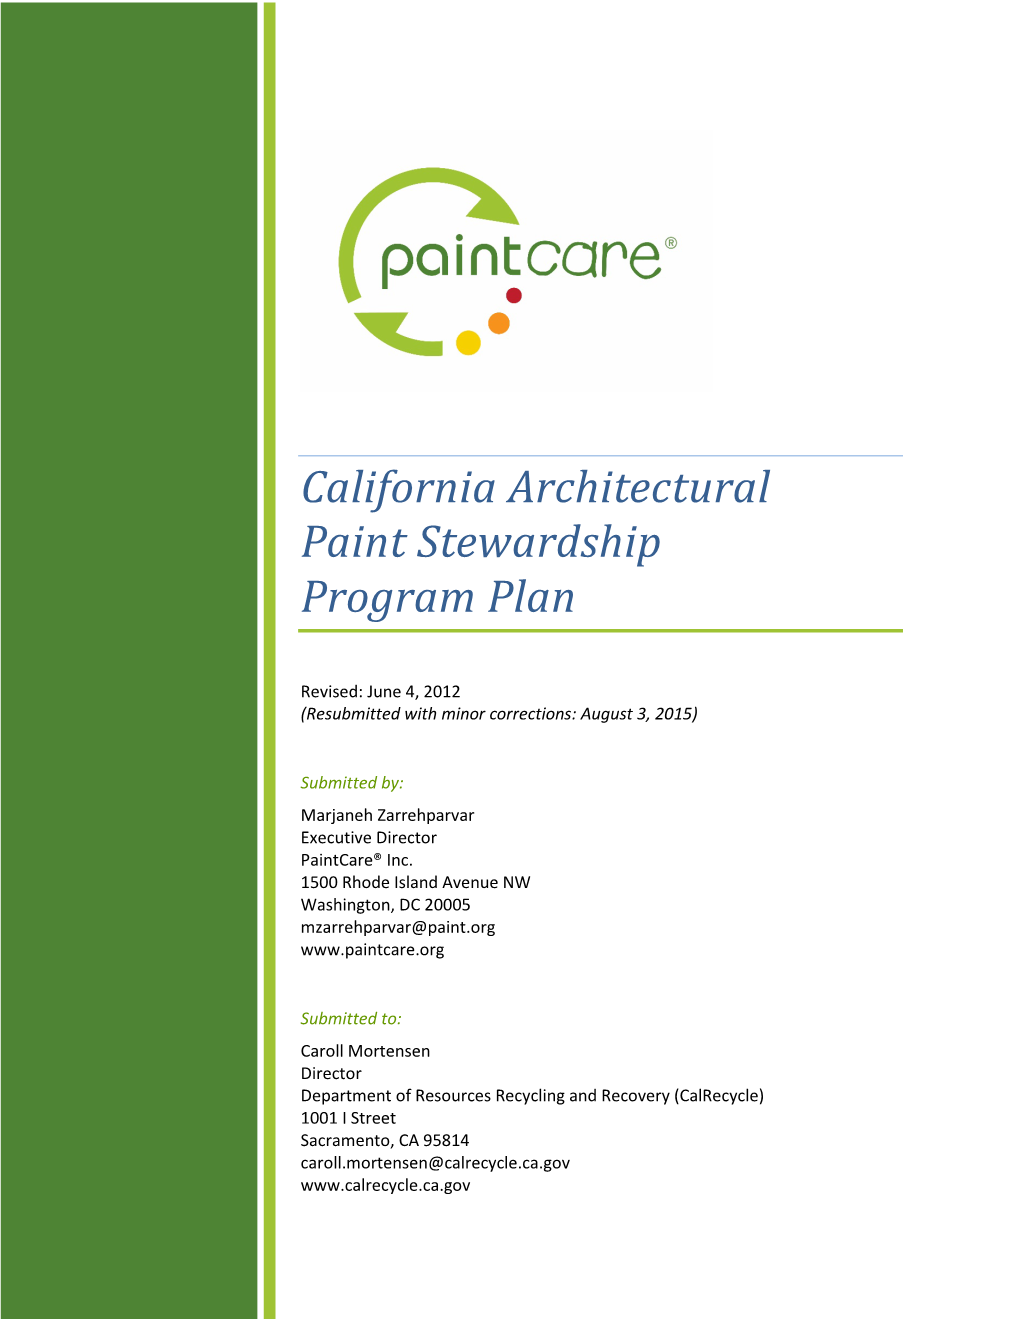 California Architectural Paint Stewardship Program Plan